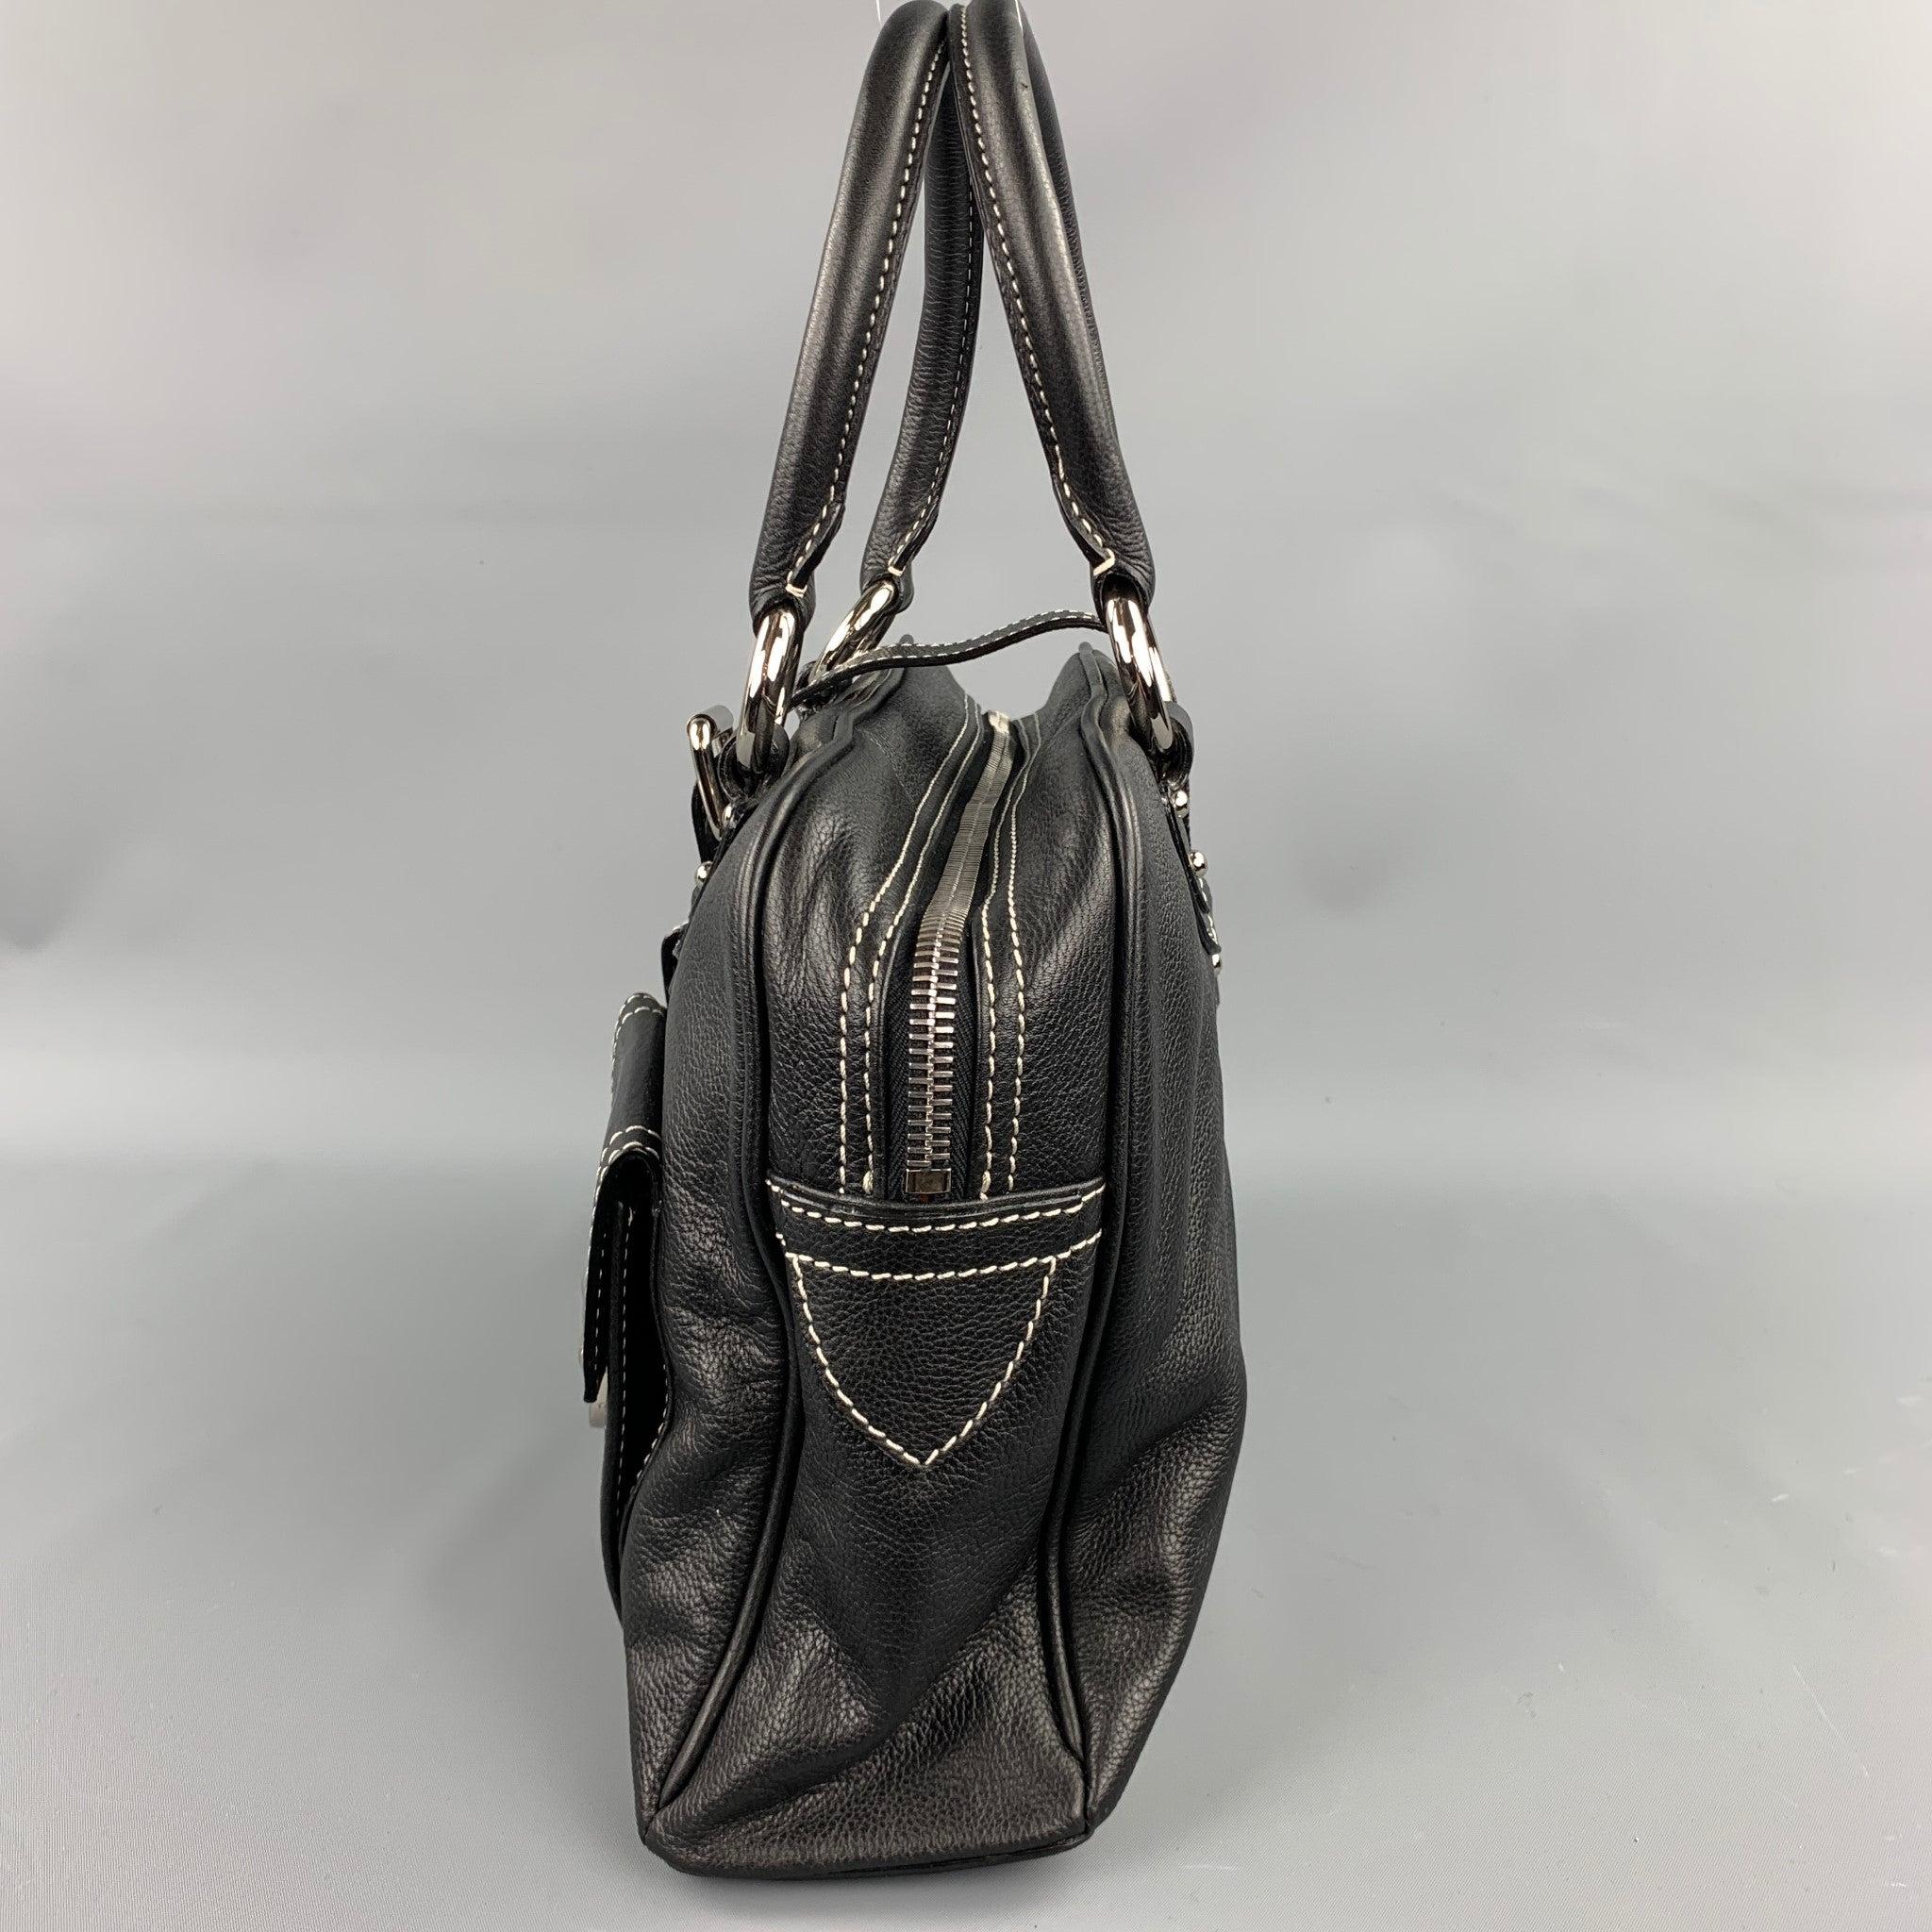 MARC JACOBS Black Contrast Stitching Leather Top Handles Handbag For Sale 1